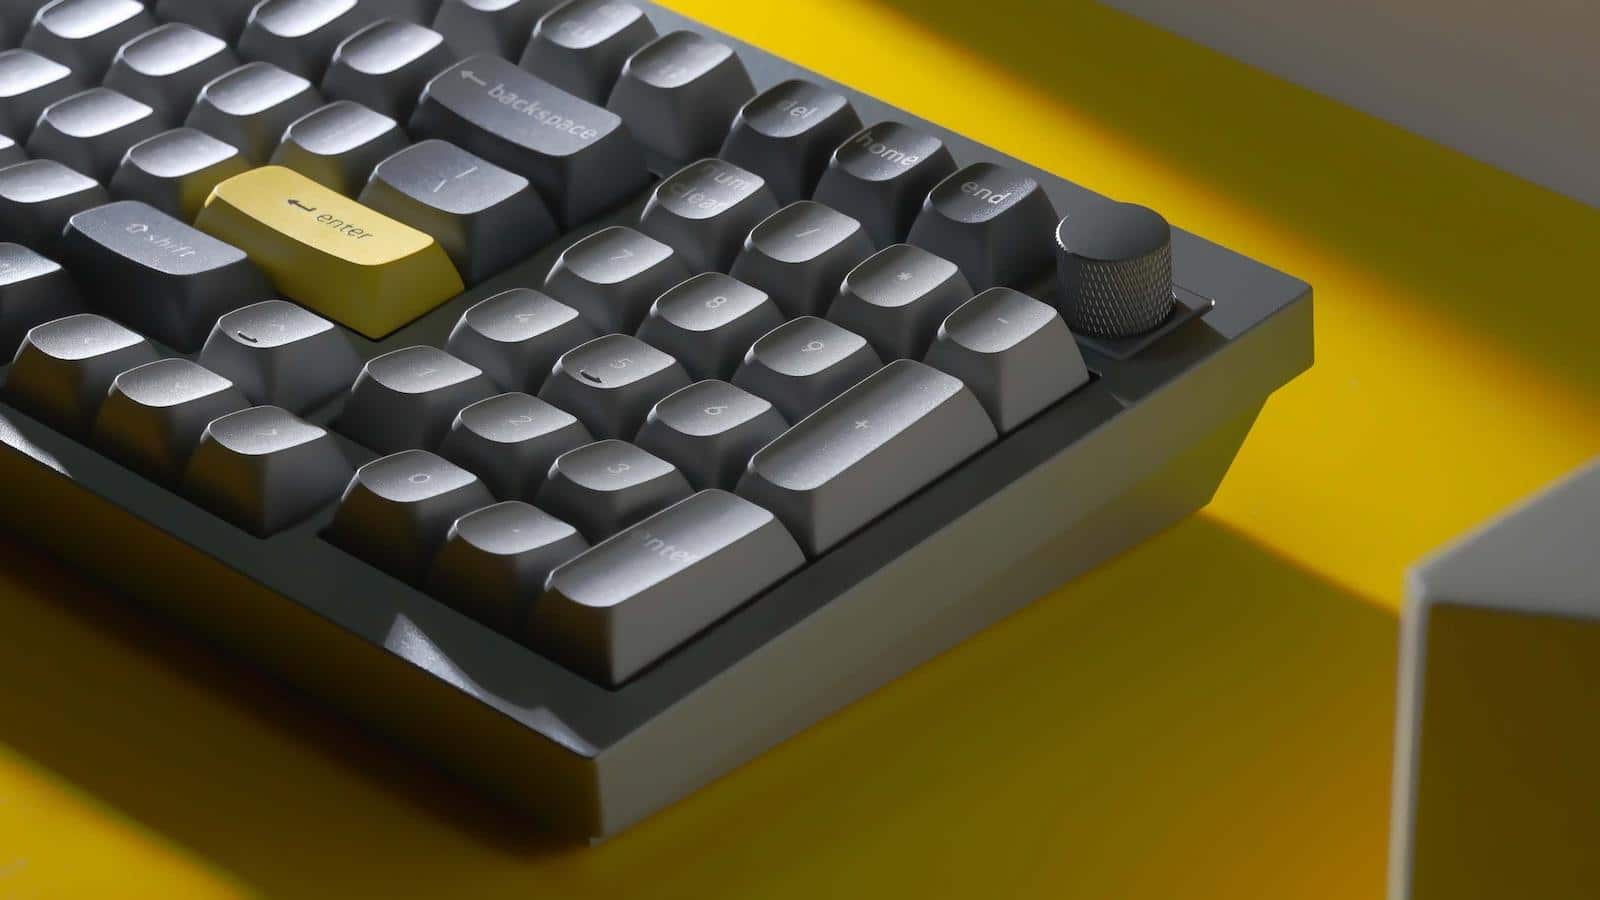 keychron q5 mechanical keyboard on yellow desk